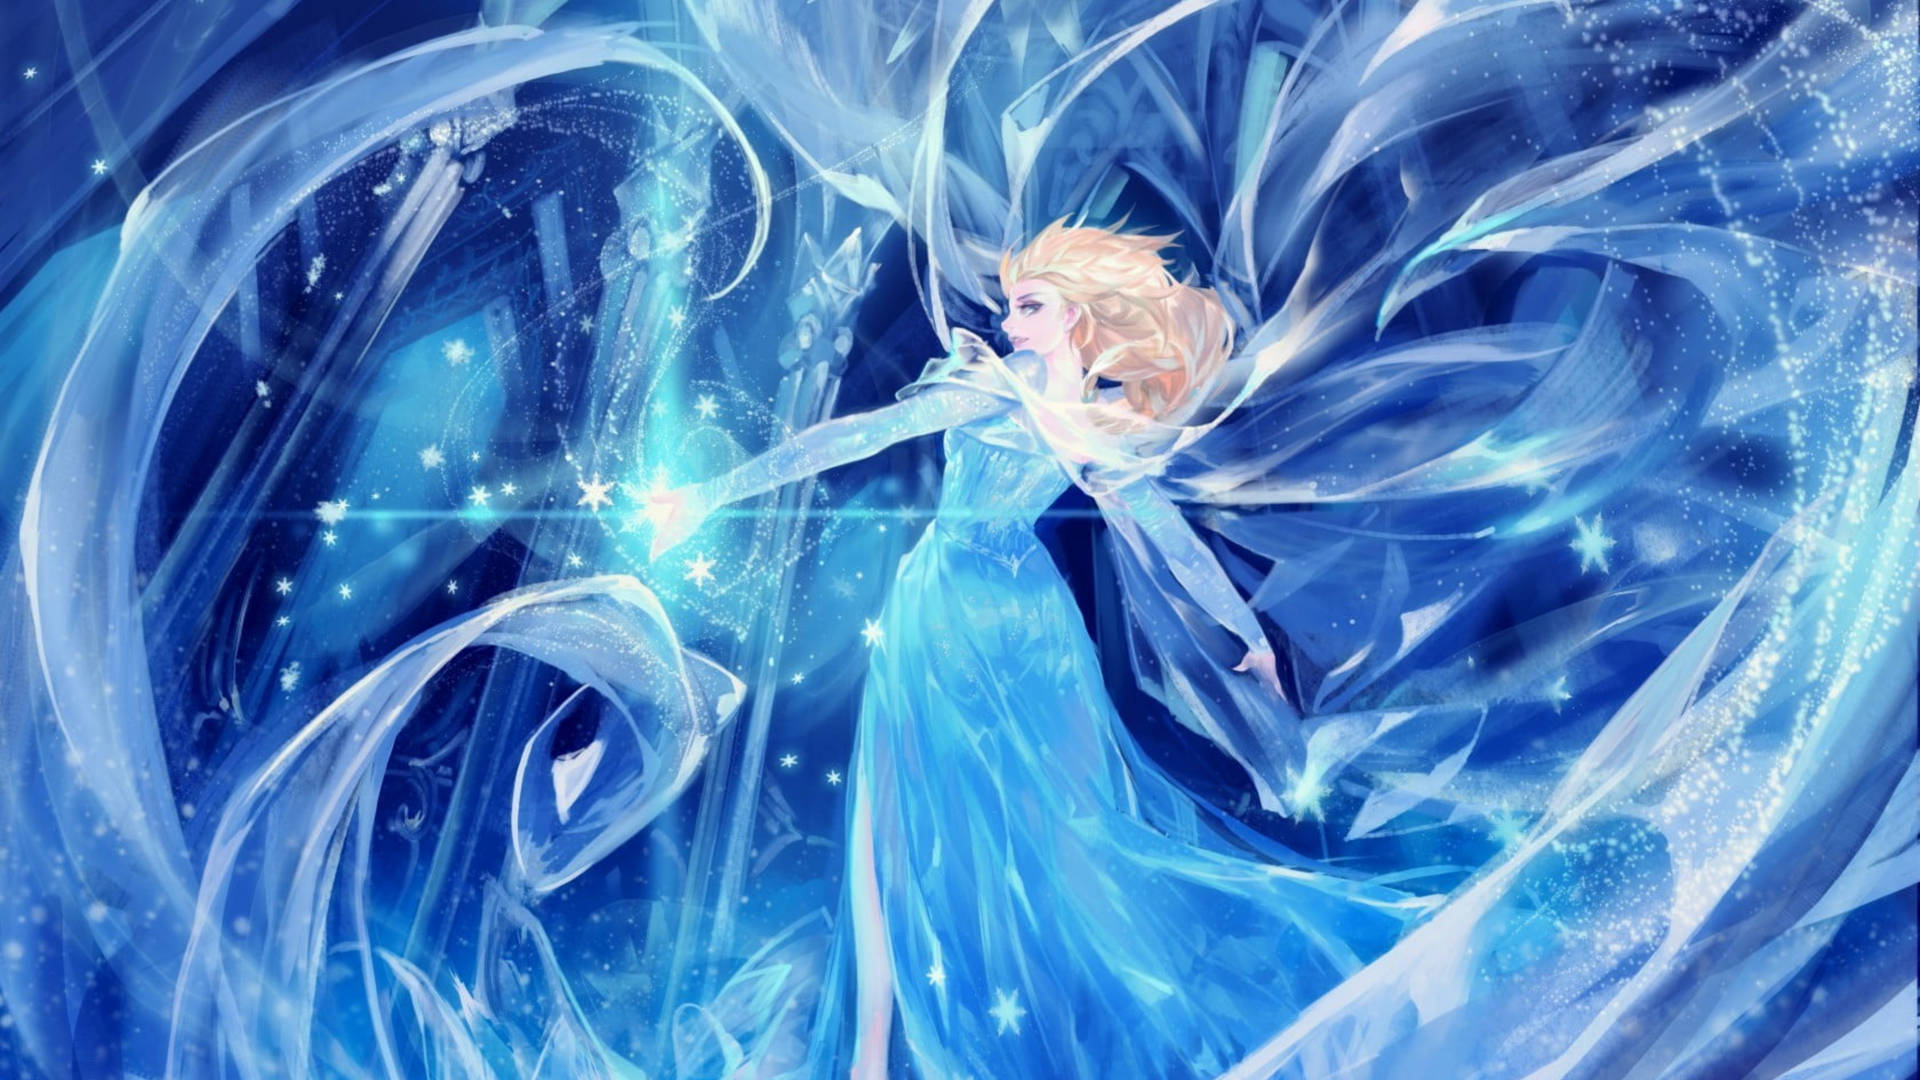 Frozen Elsa Anime Style Fanart Background